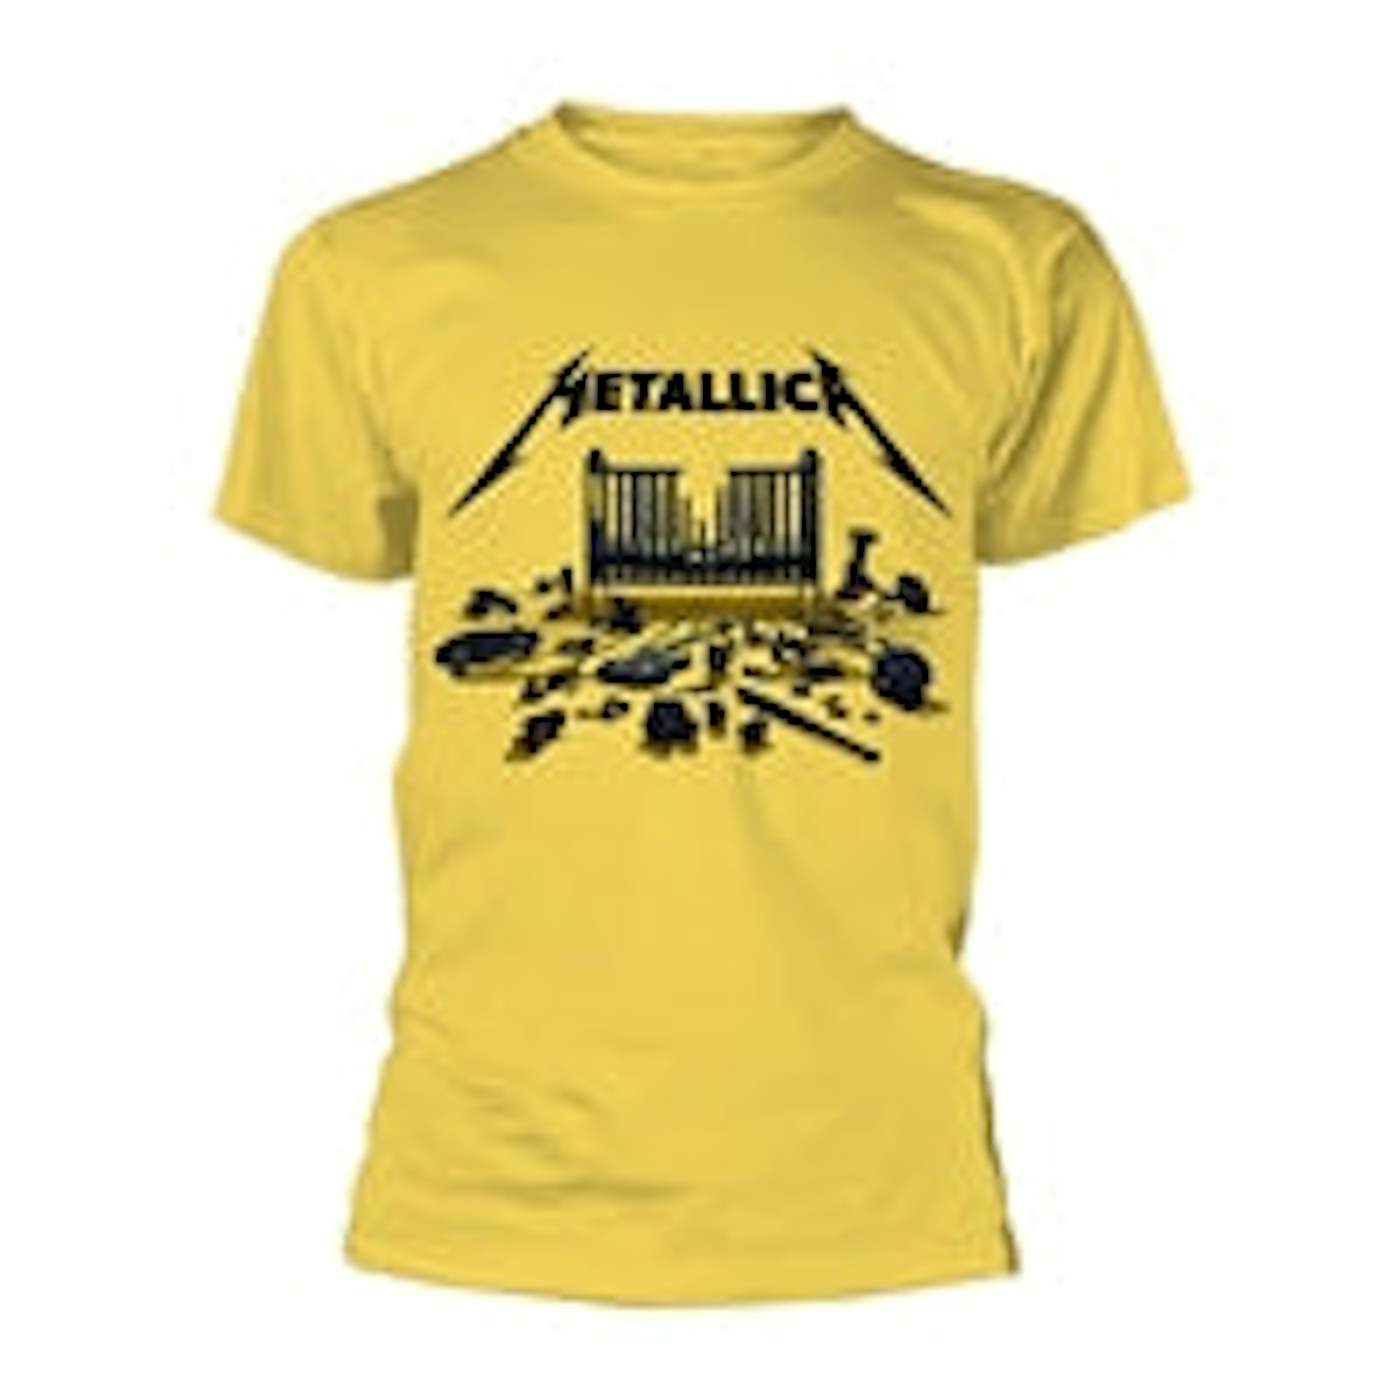 Metallica Merch Store, Official Metallica Shirts, Vinyl Records, Metallica Hoodies, Metallica Hats, Metallica Posters, Live Tour